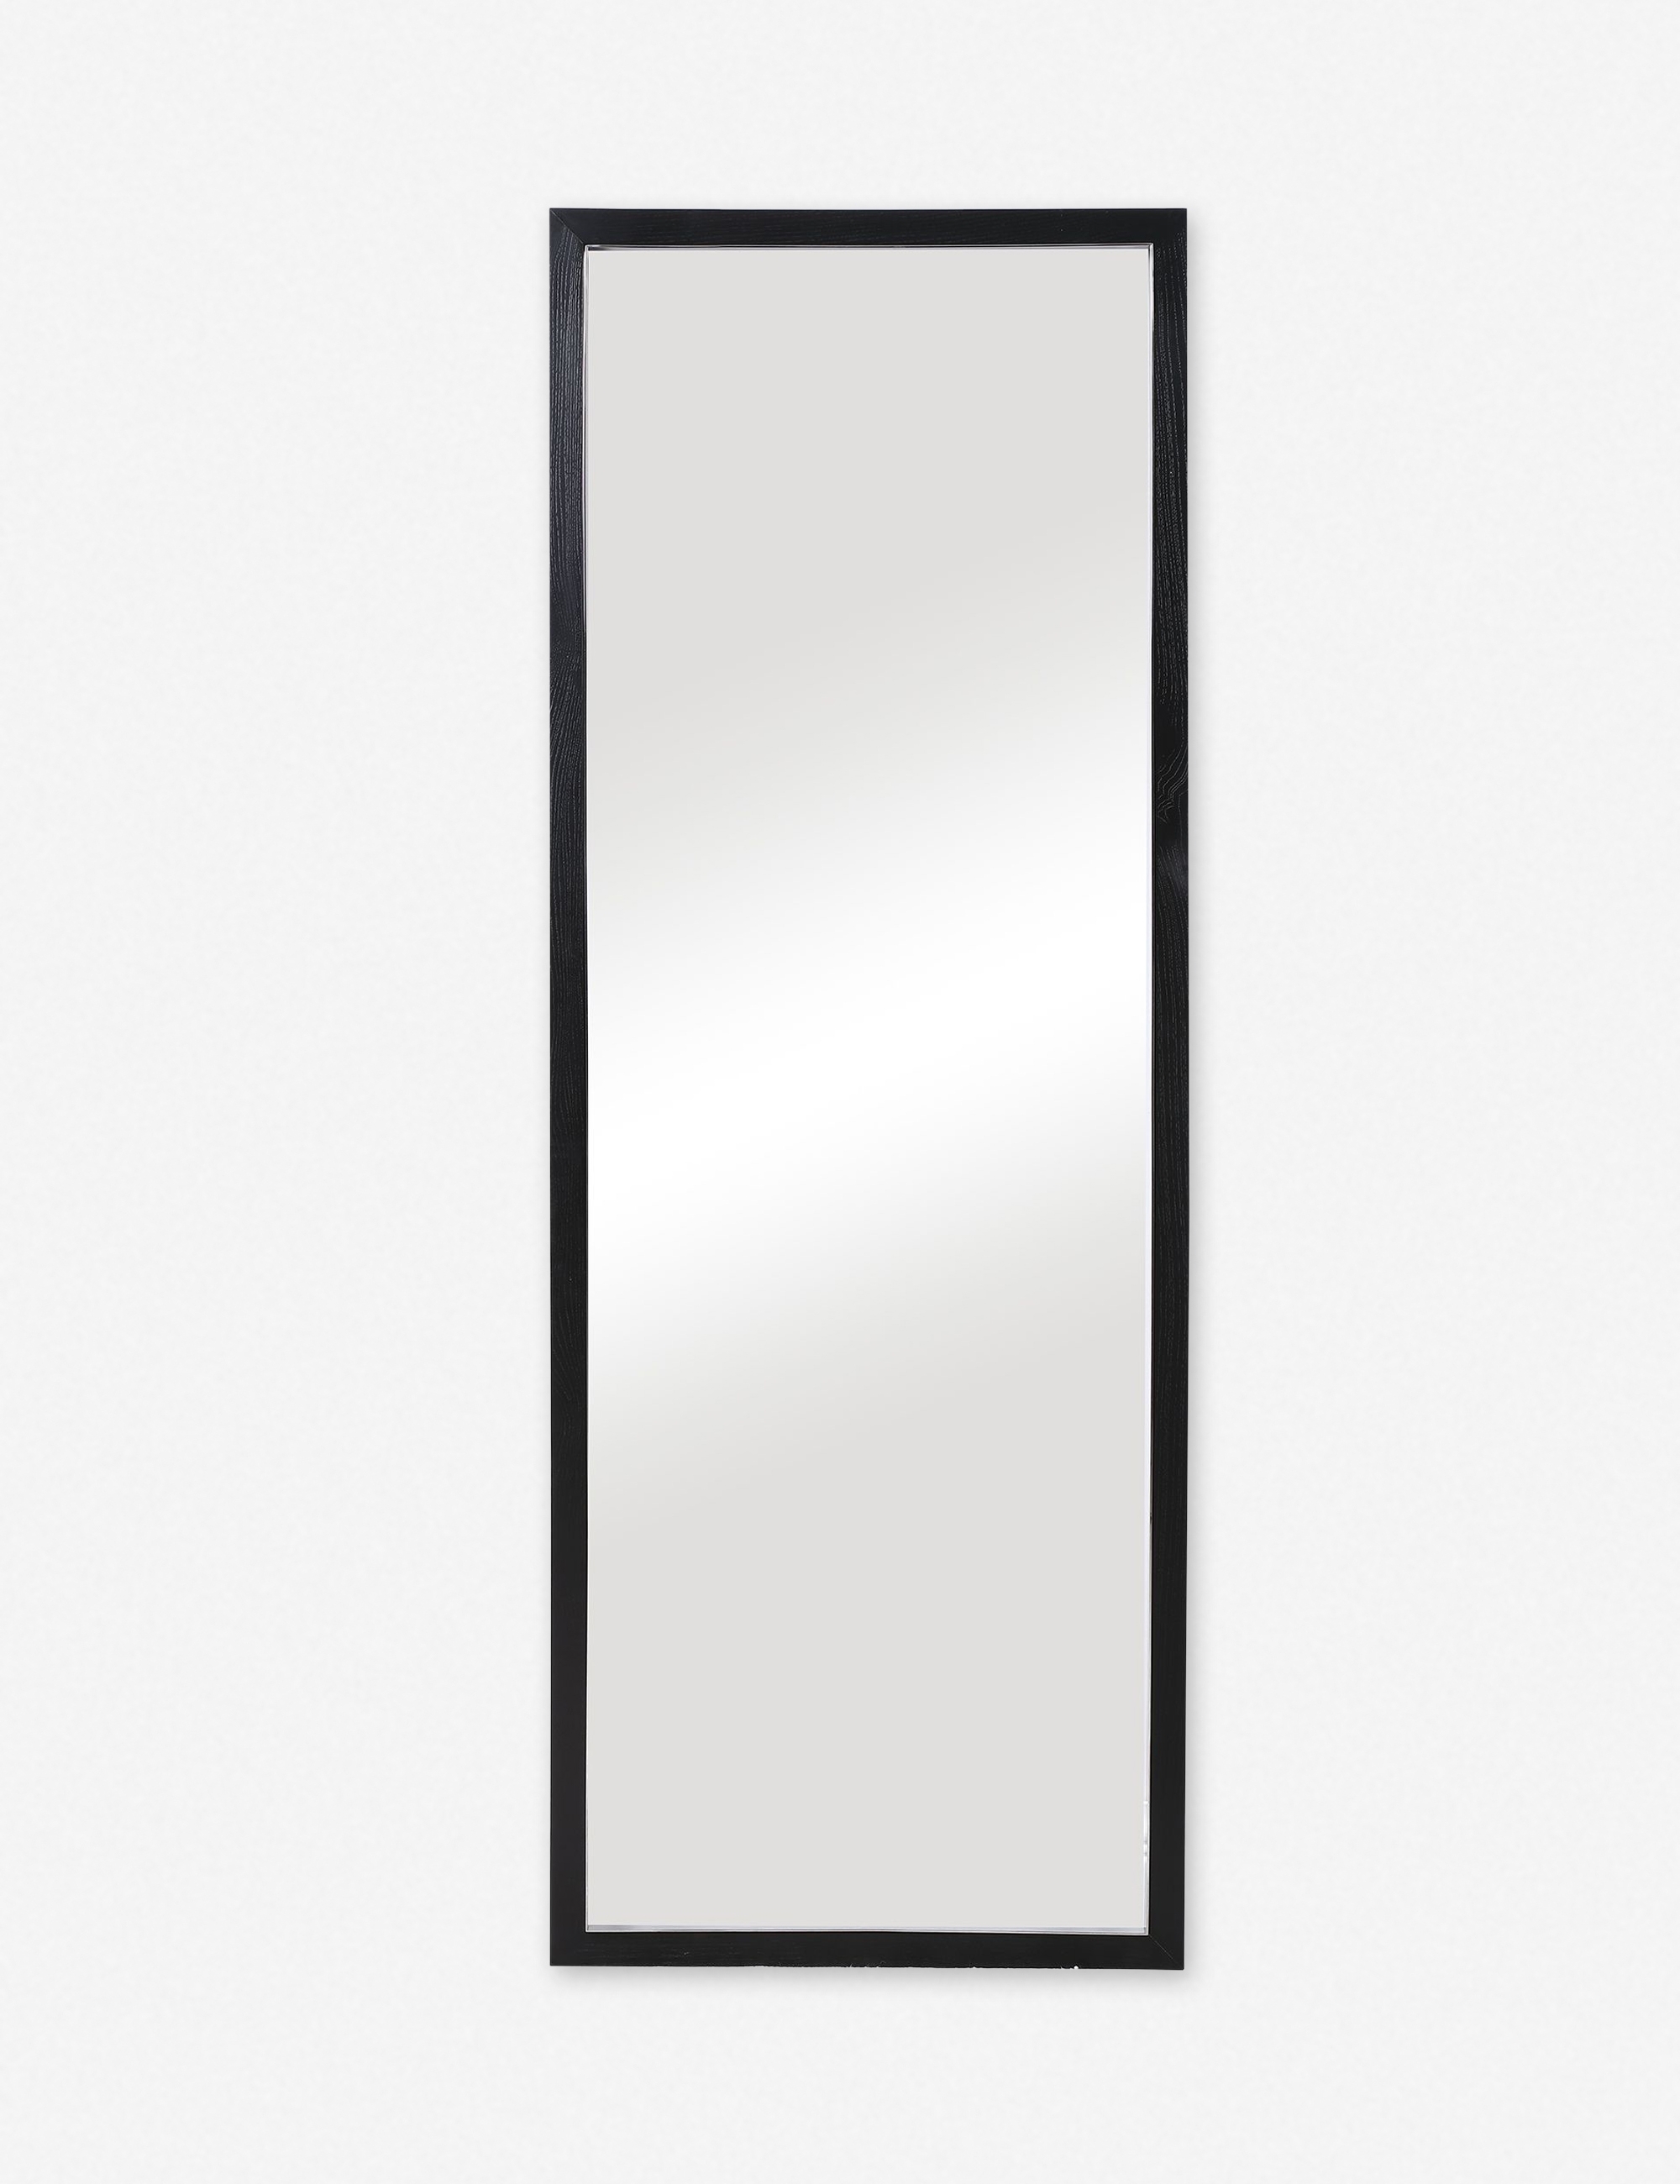 Zinsa Mirror, Black - Image 0